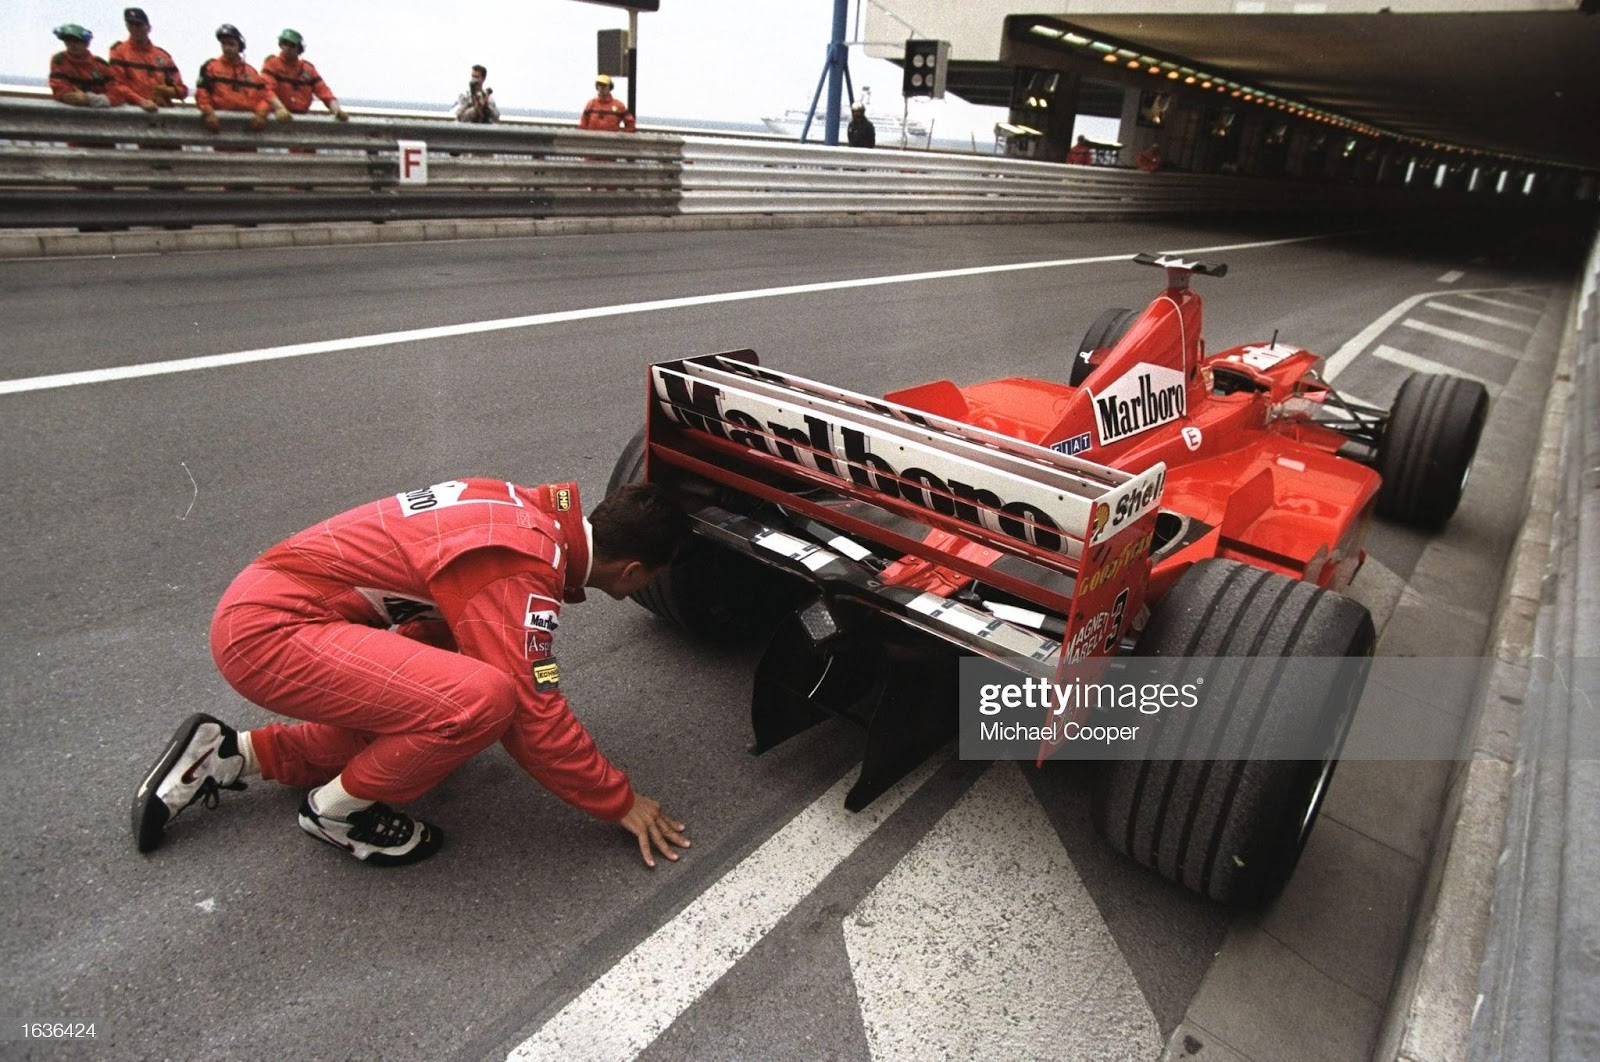 21-24 May 1998: Michael Schumacher looks at his broken down Ferrari during the Monaco Grand Prix at the Monte Carlo circuit.